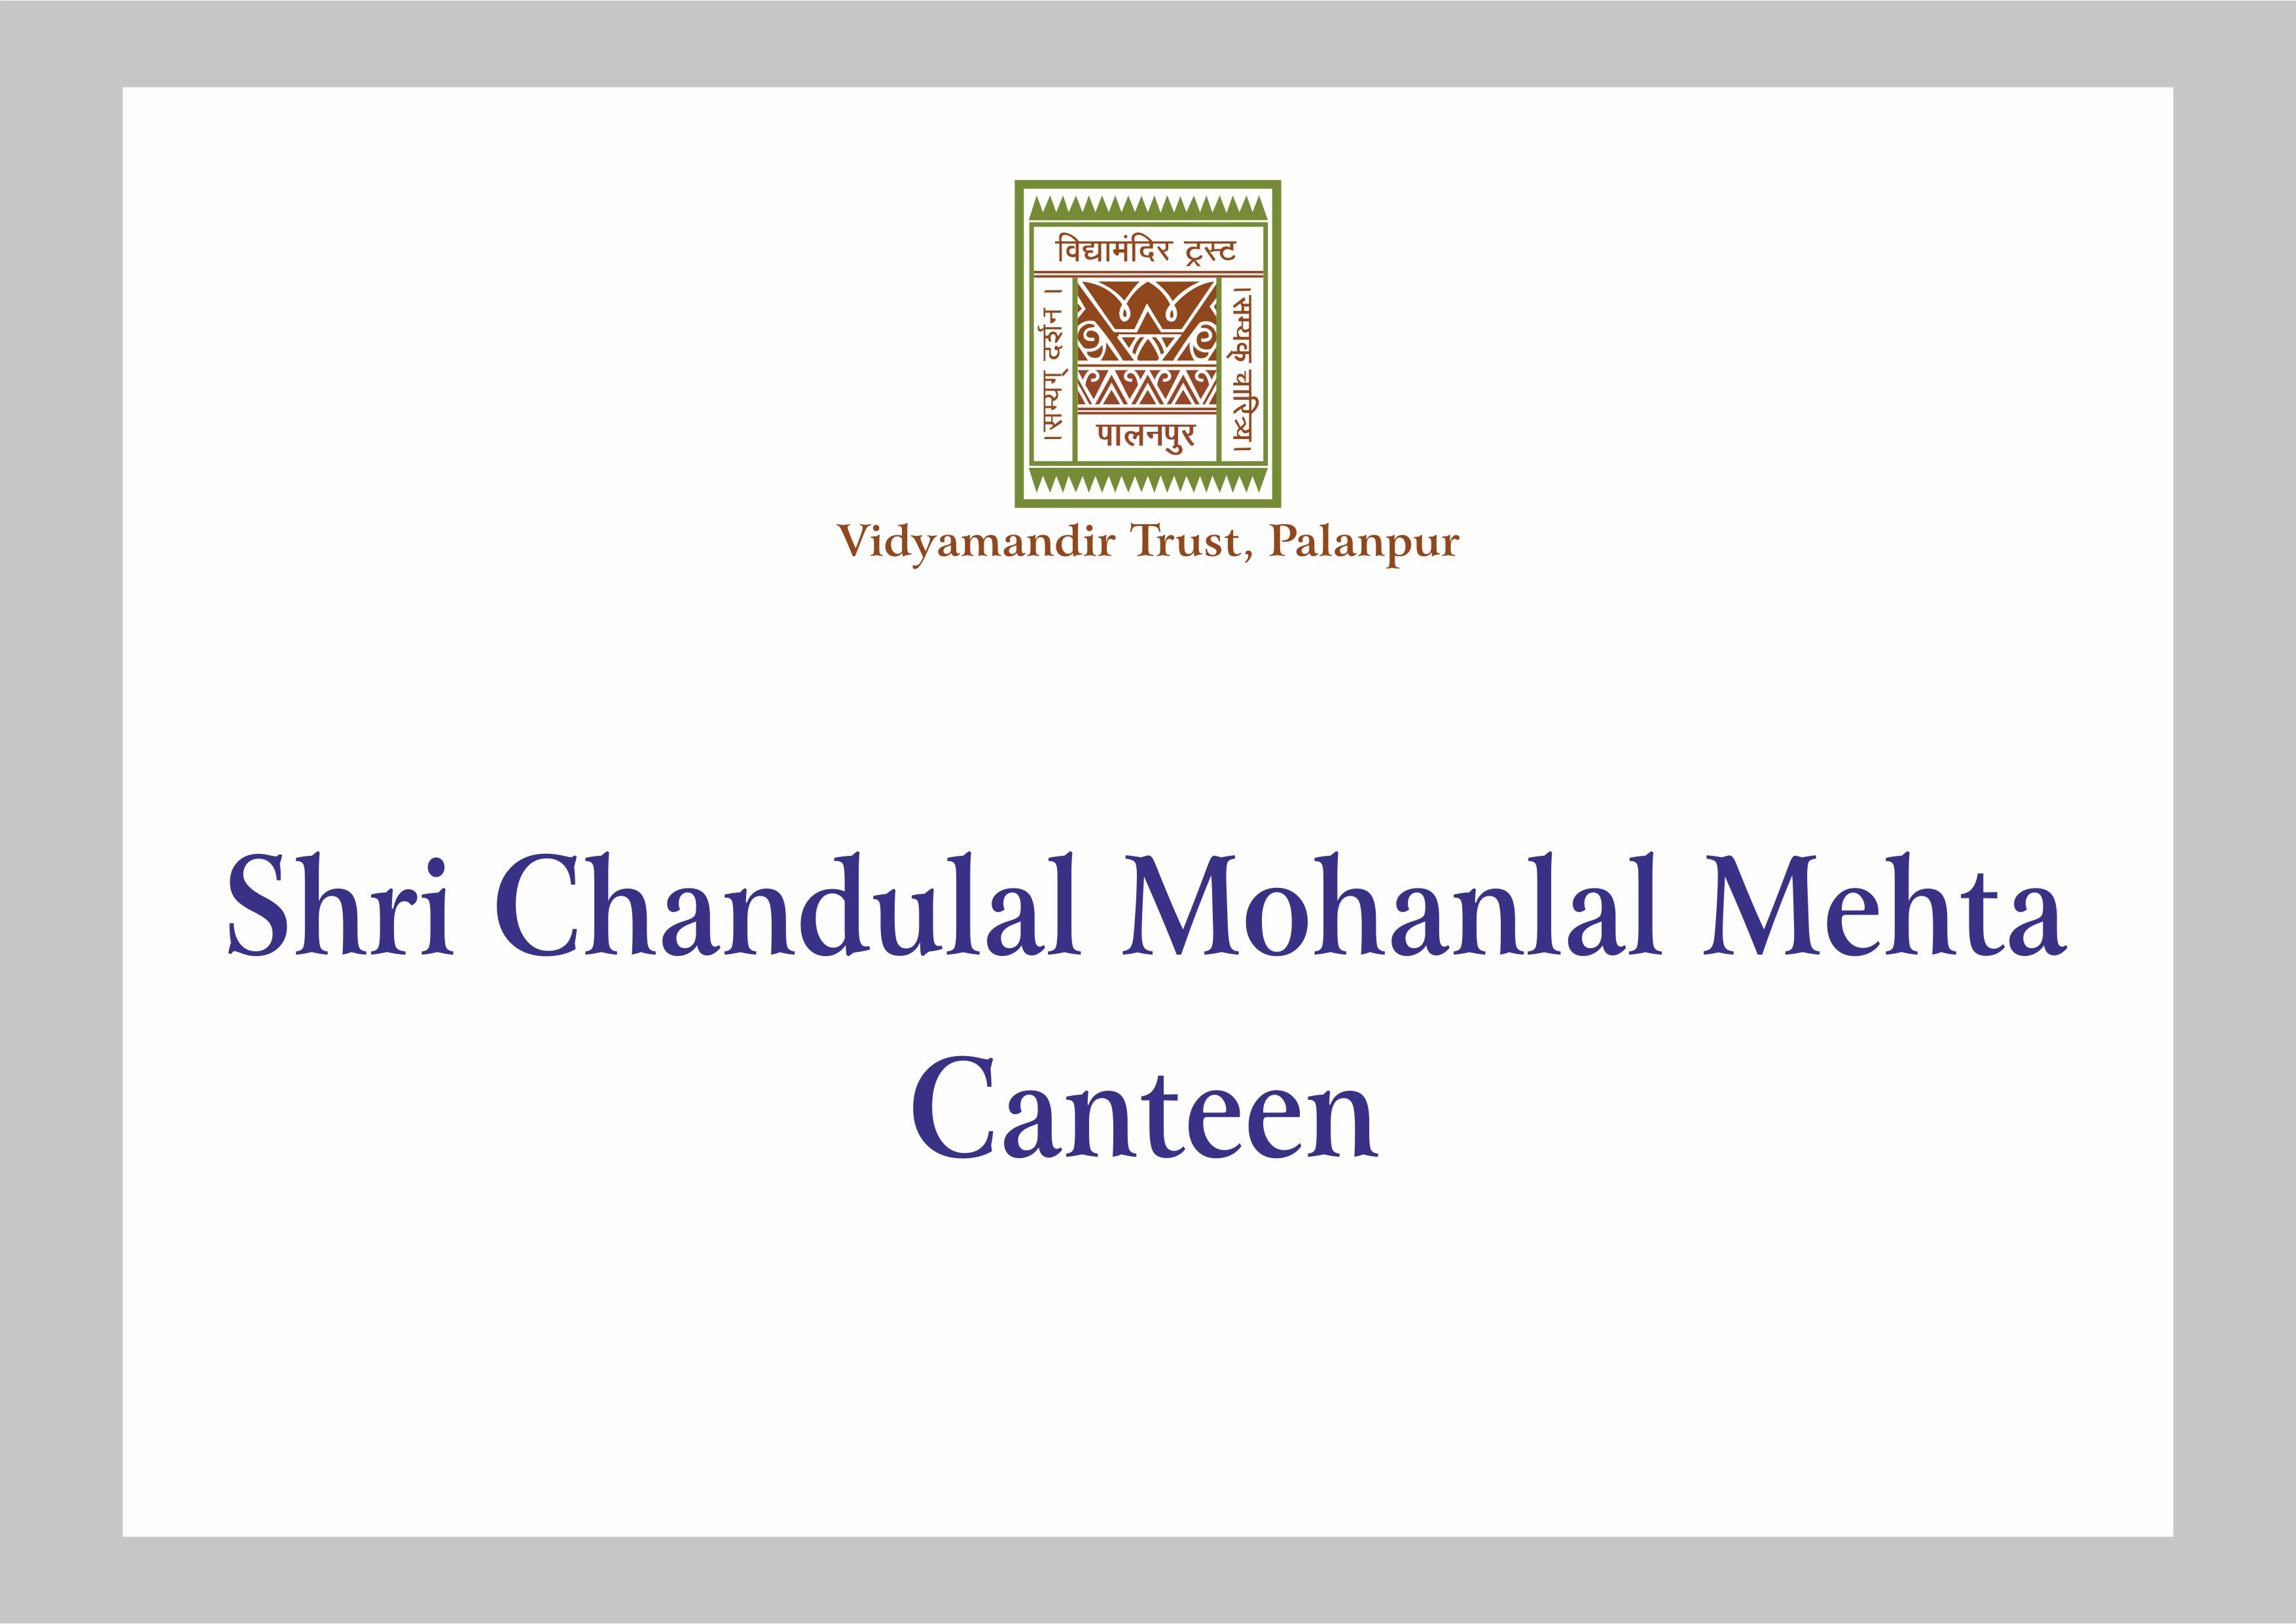 Shri Chandulal Mohanlal Mehta Canteen - Building Photo